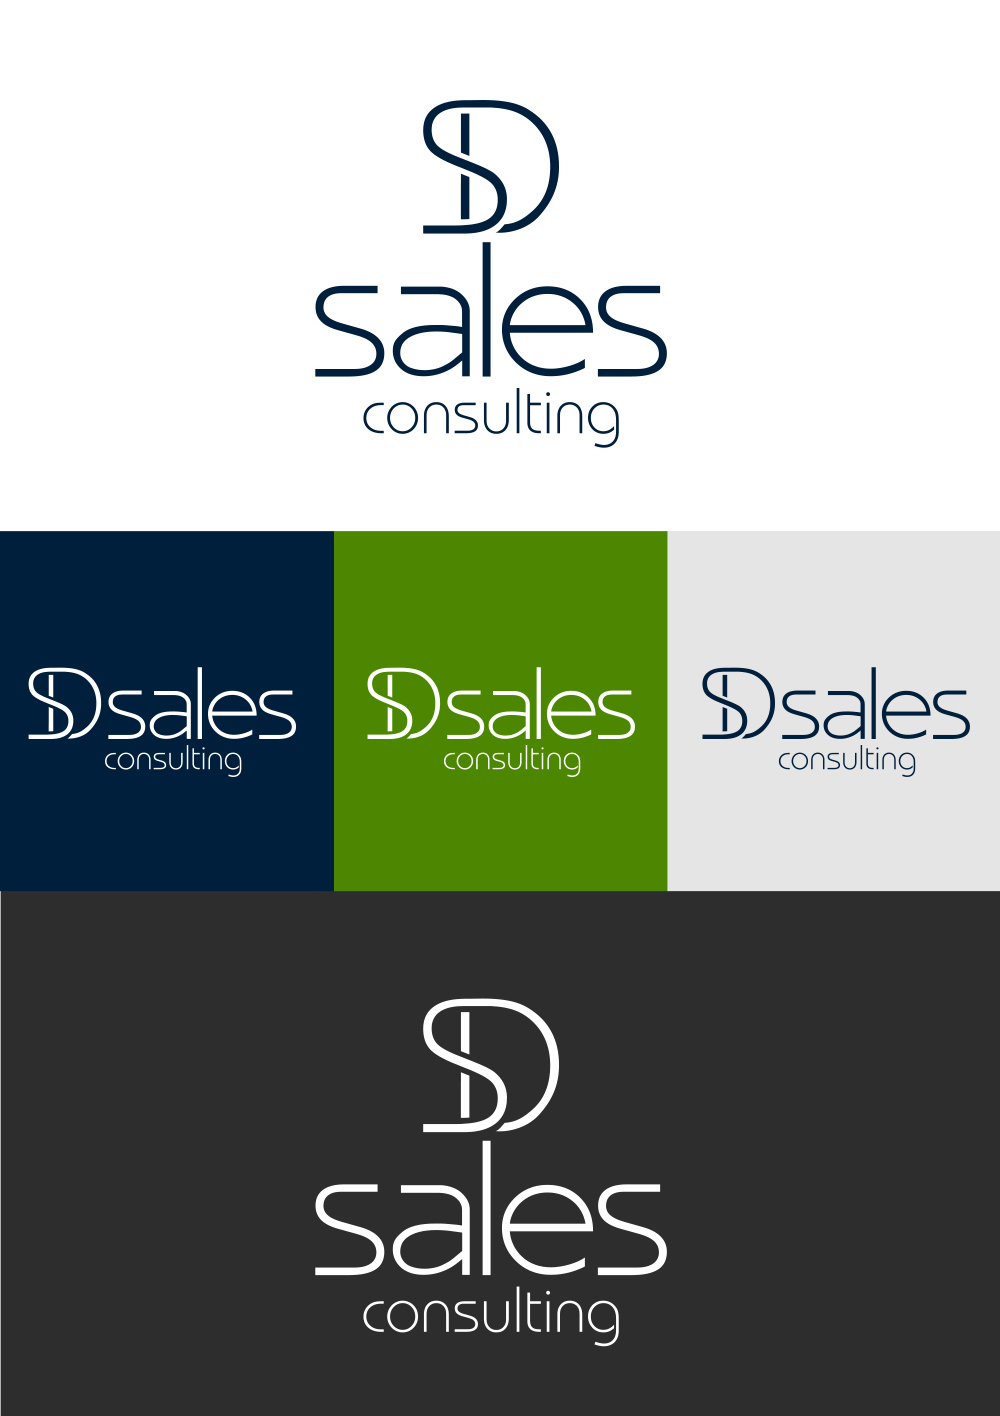 criacao-de-logotipo-SD-Sales-identidade-visual-2